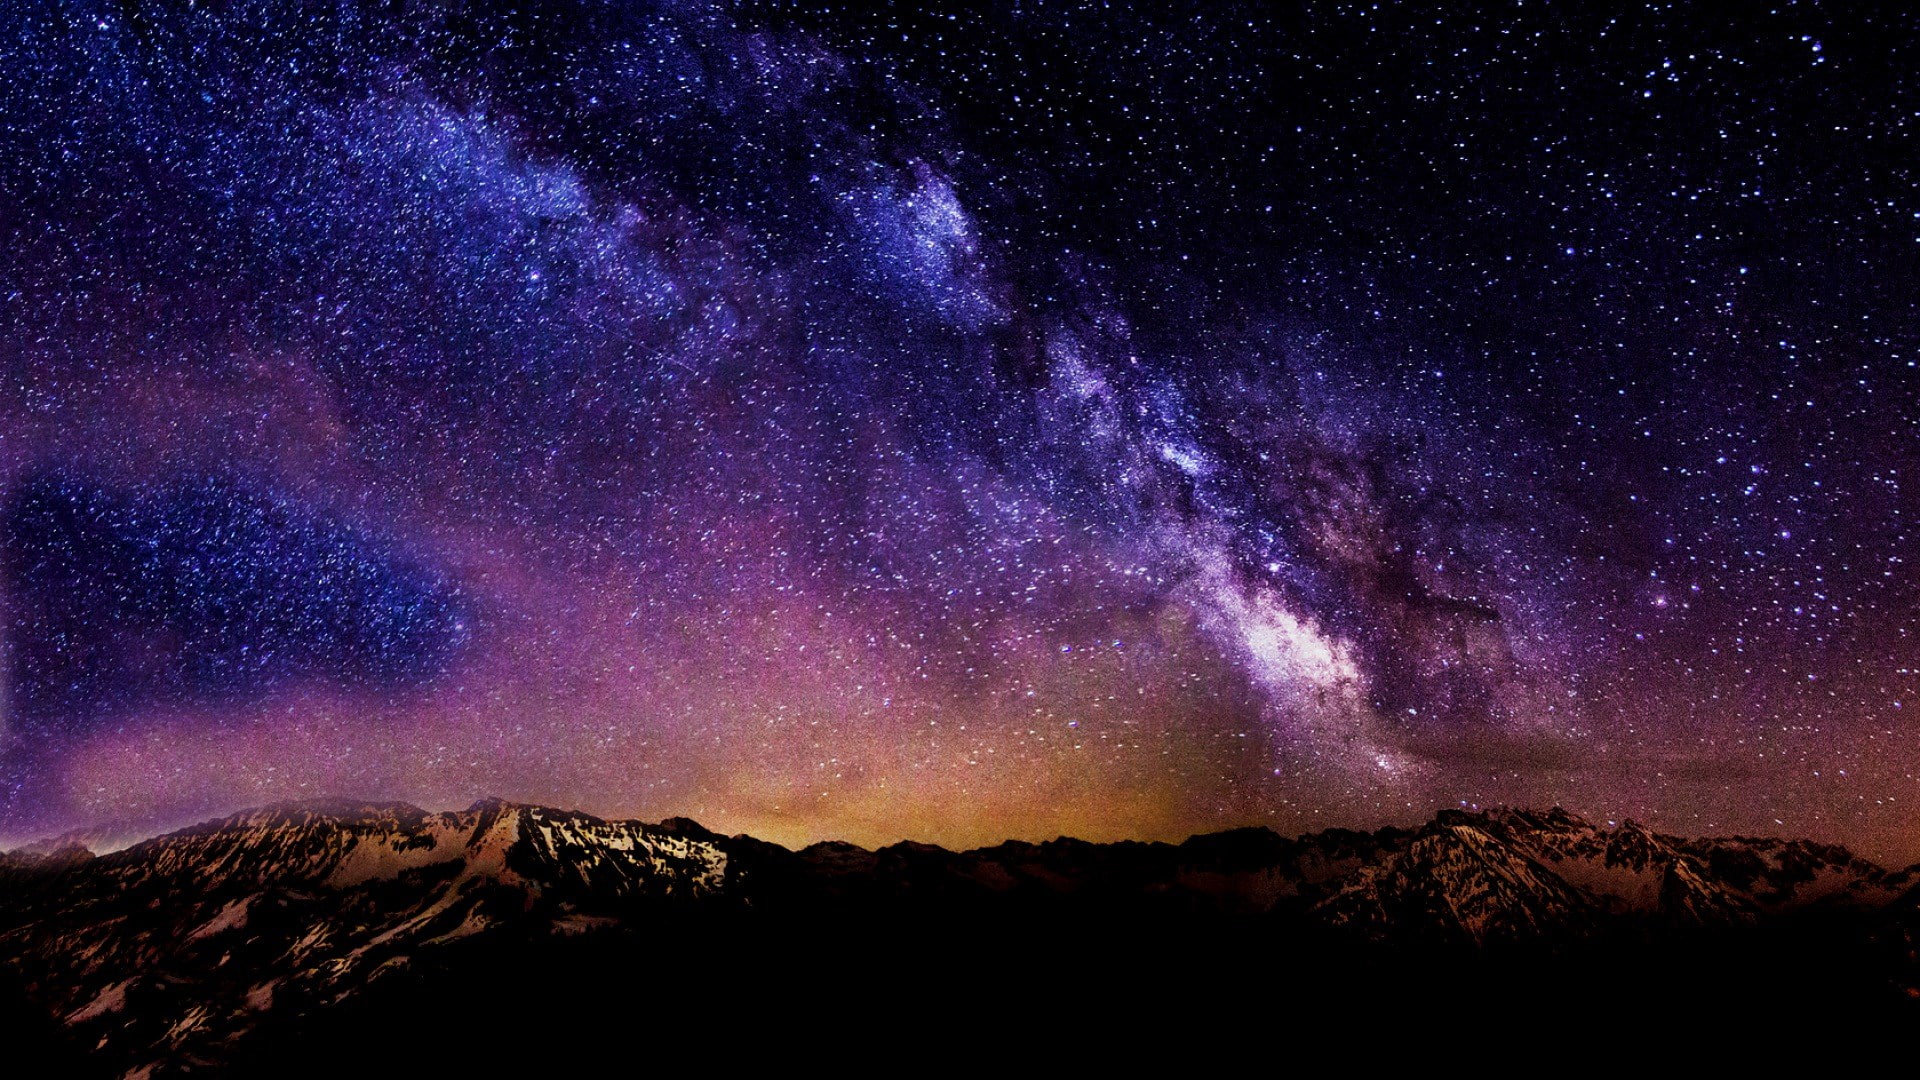 night sky  screensaver, star - space, astronomy, scenics - nature